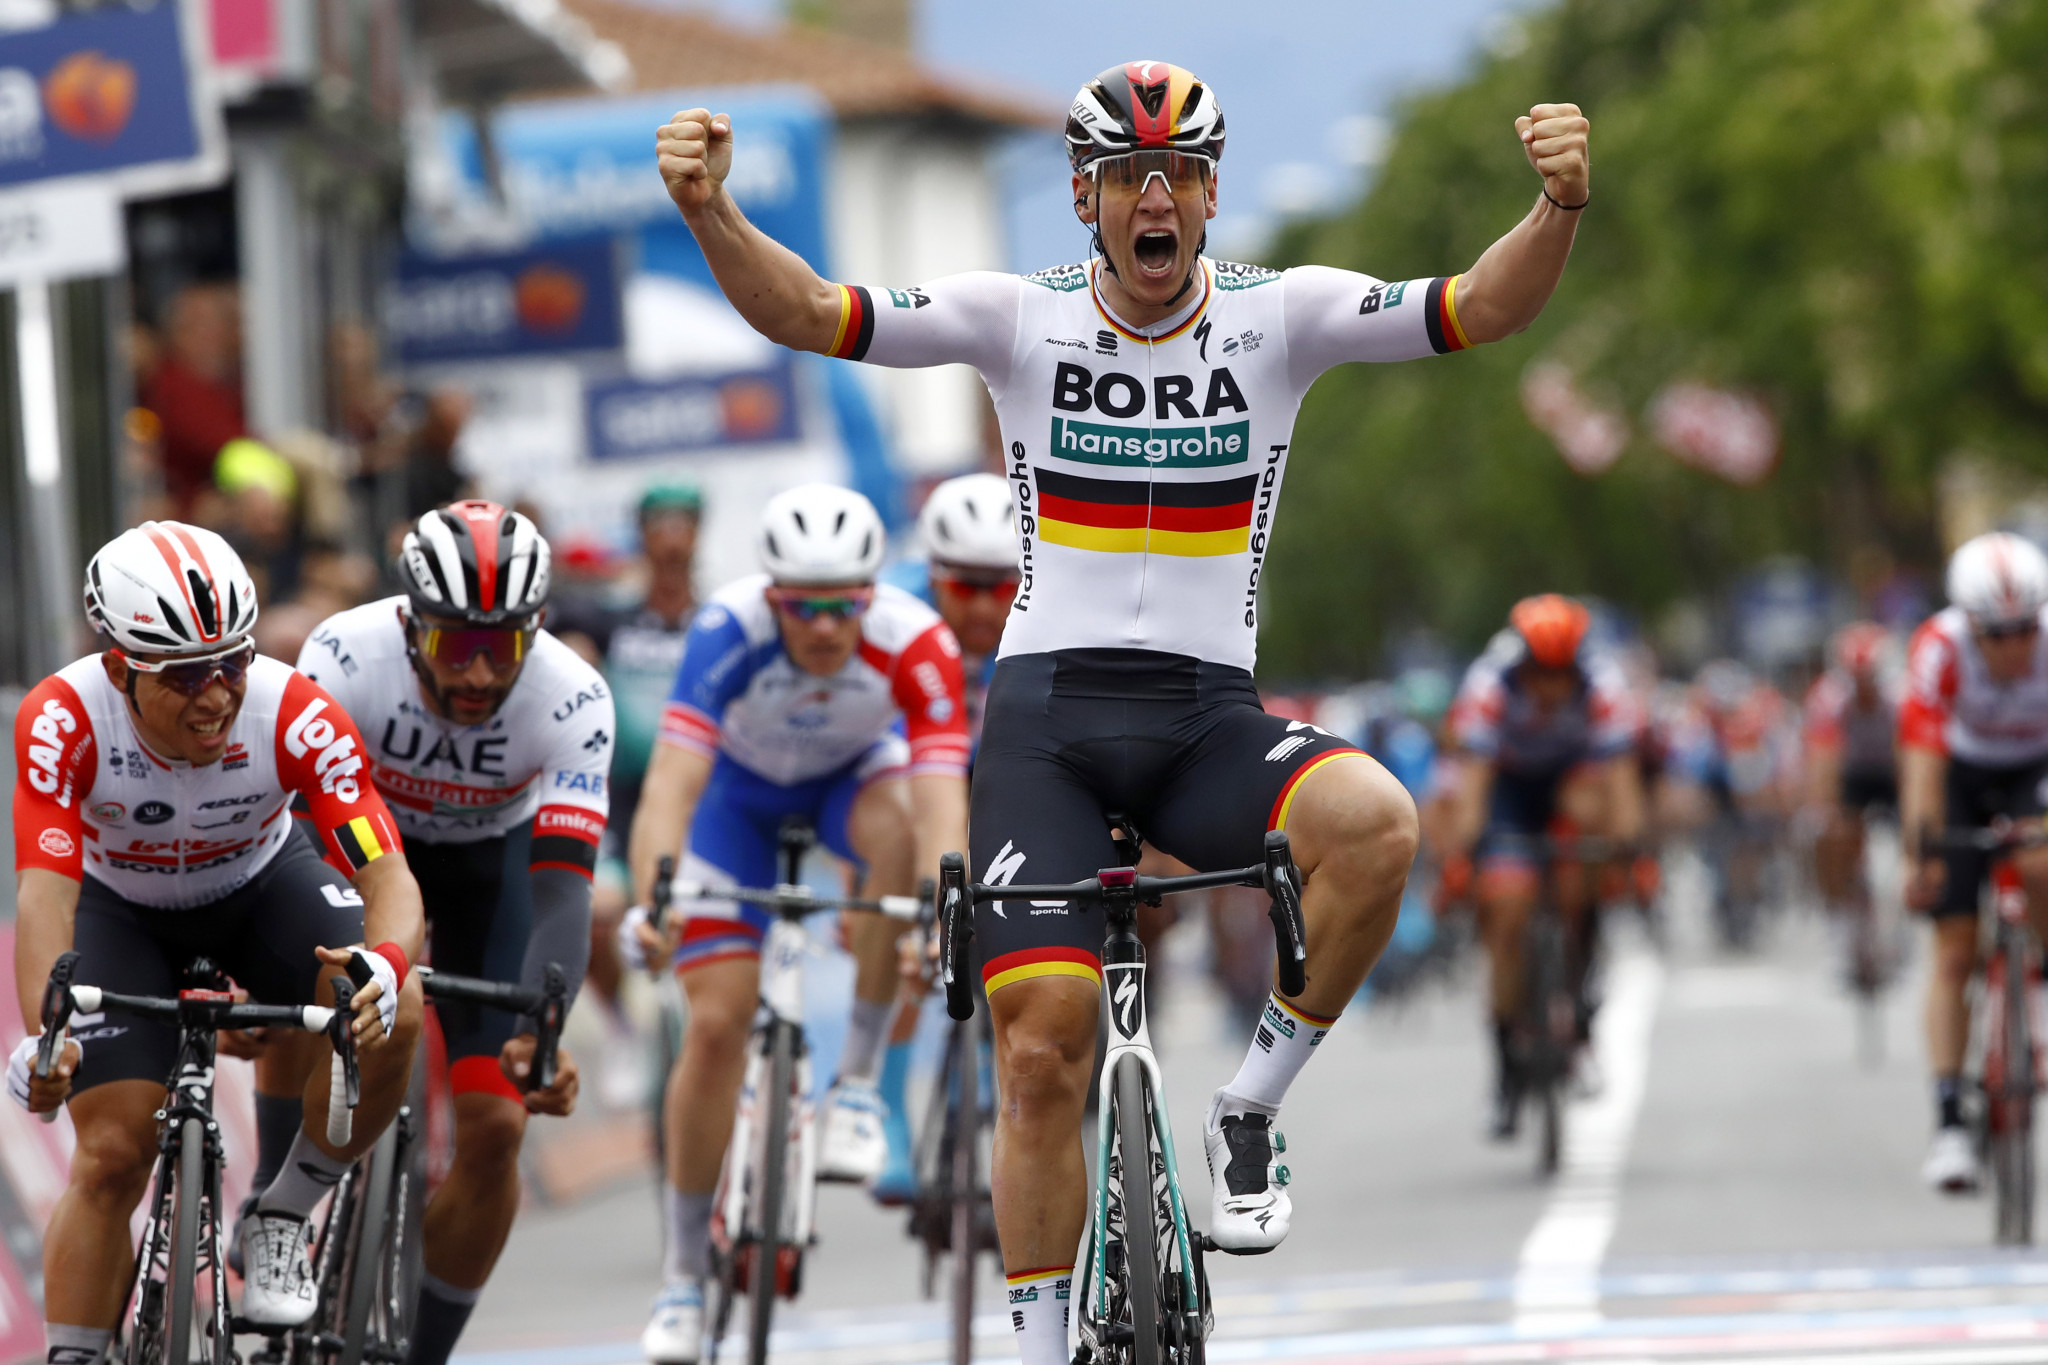  Ackermann wins Giro d’Italia second stage but Roglič retains leader’s jersey